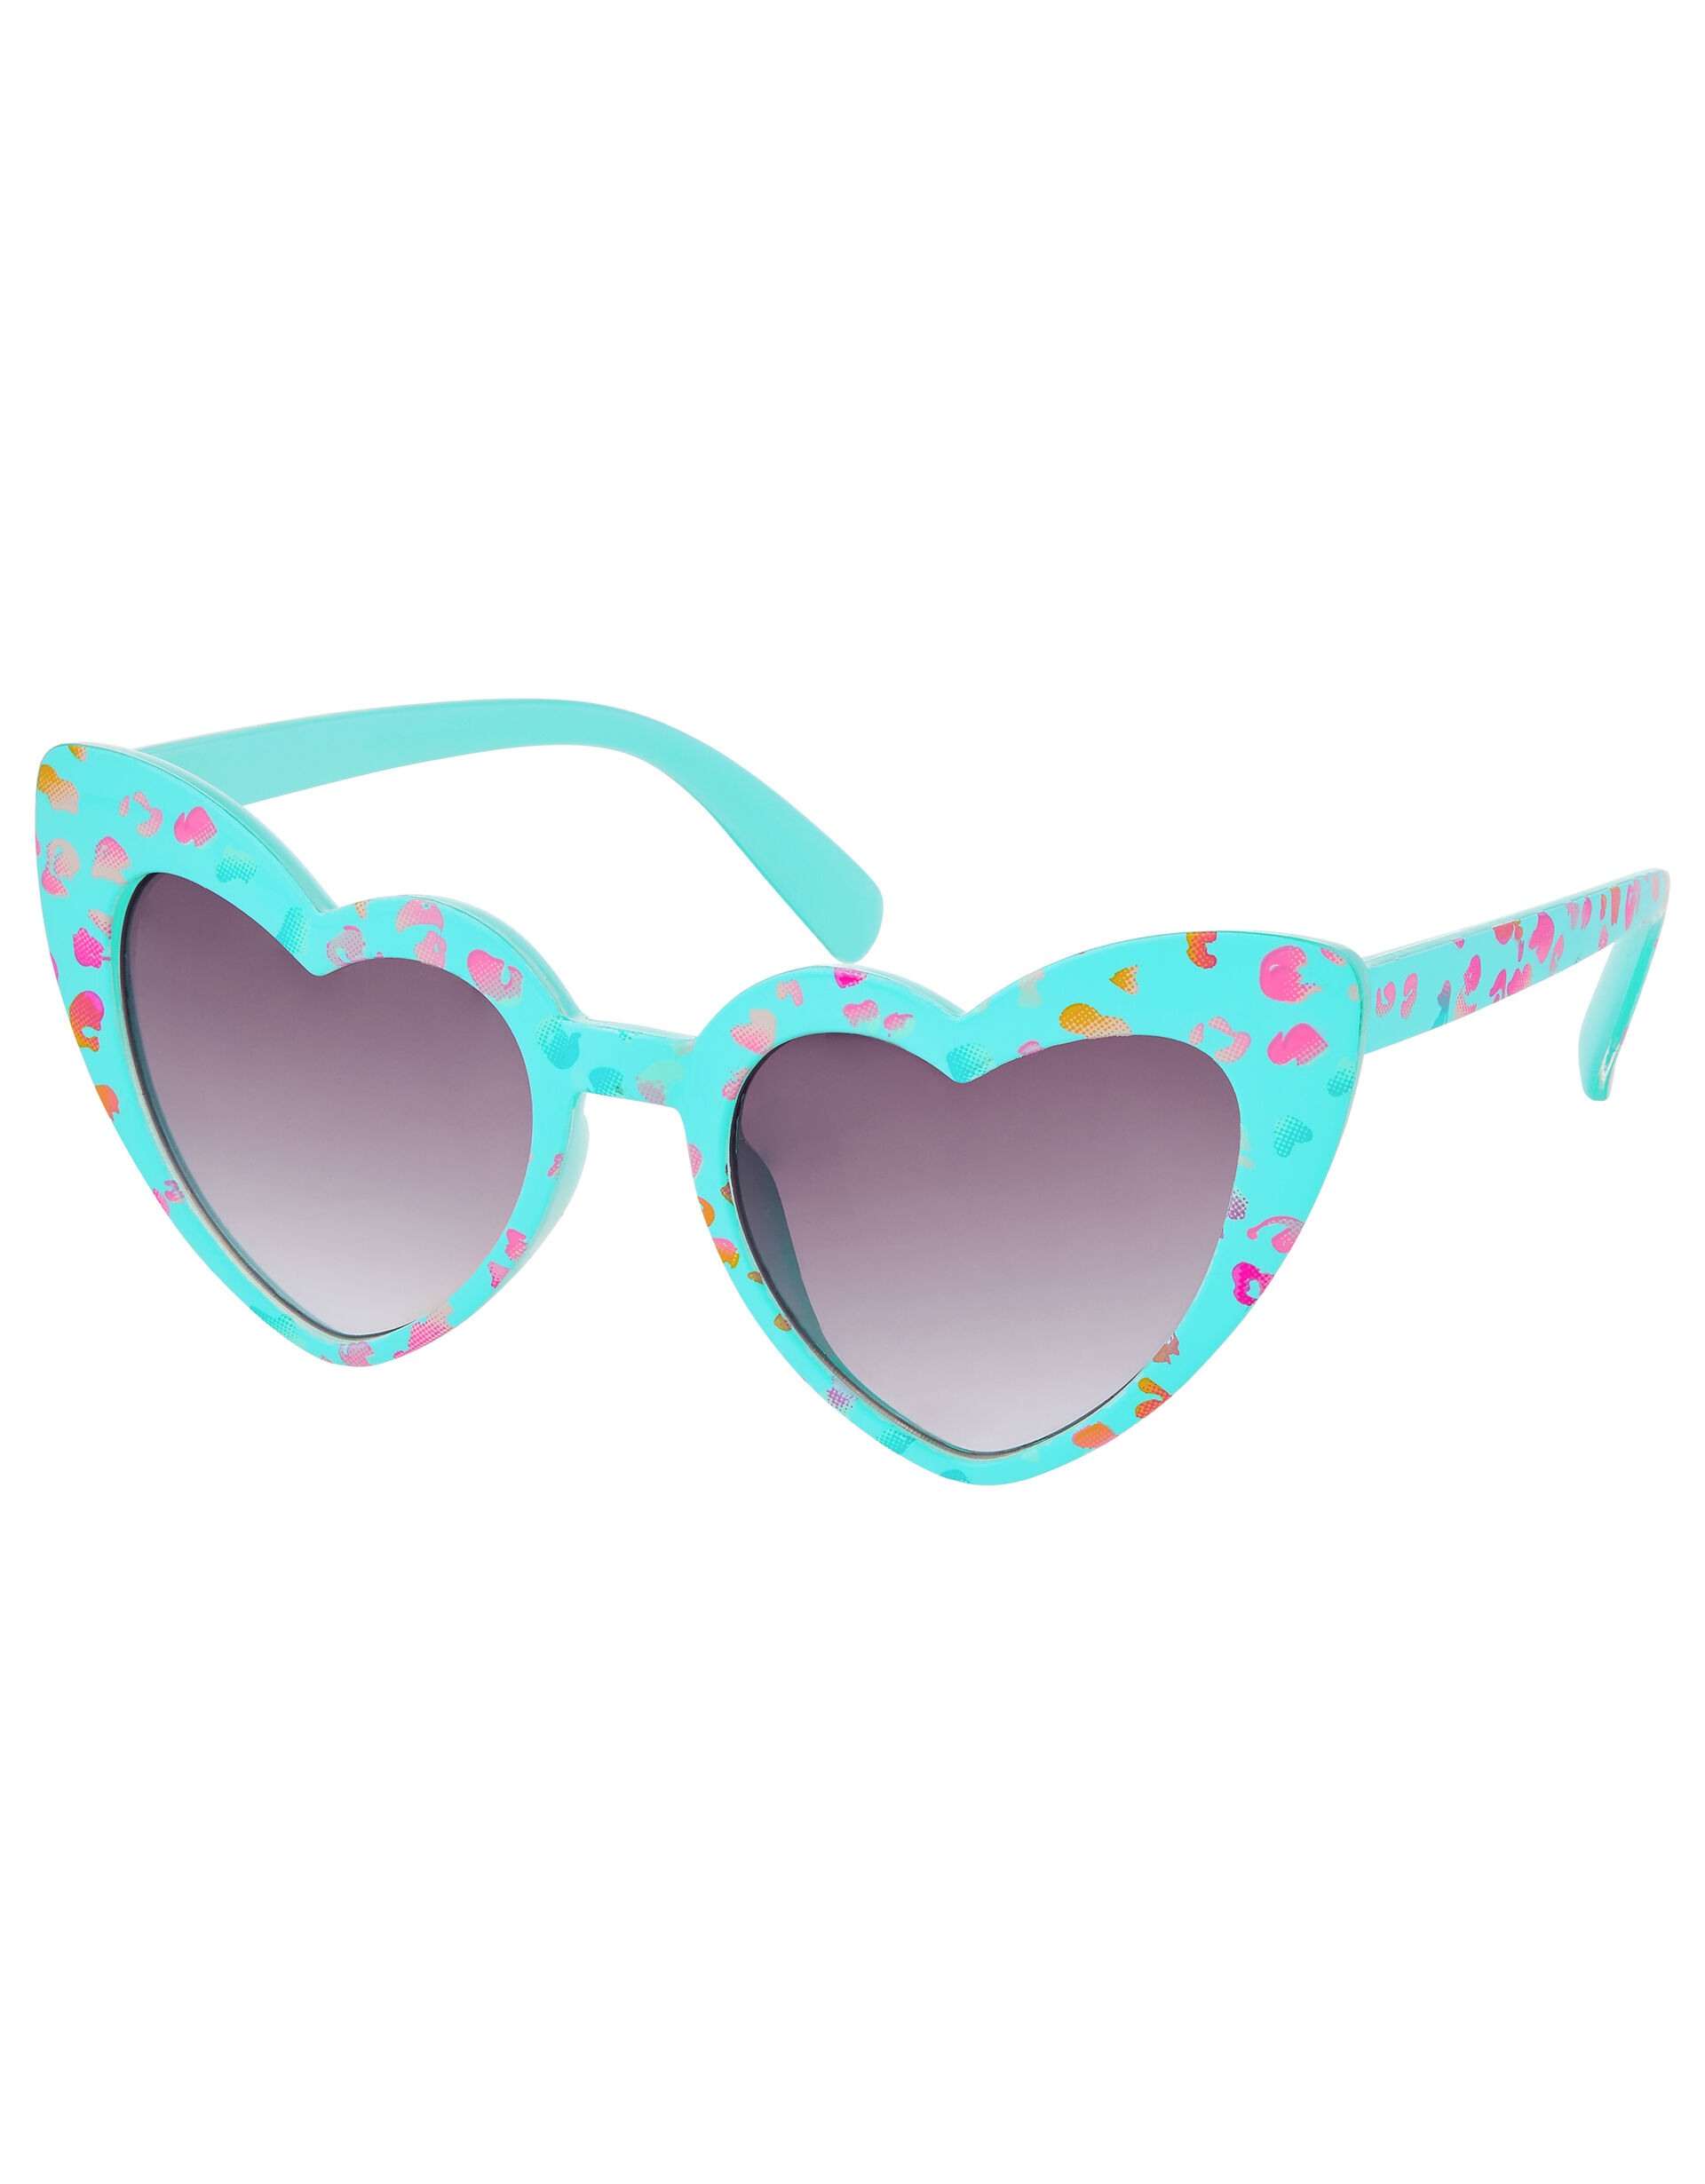 Heart Leopard Print Sunglasses, , large